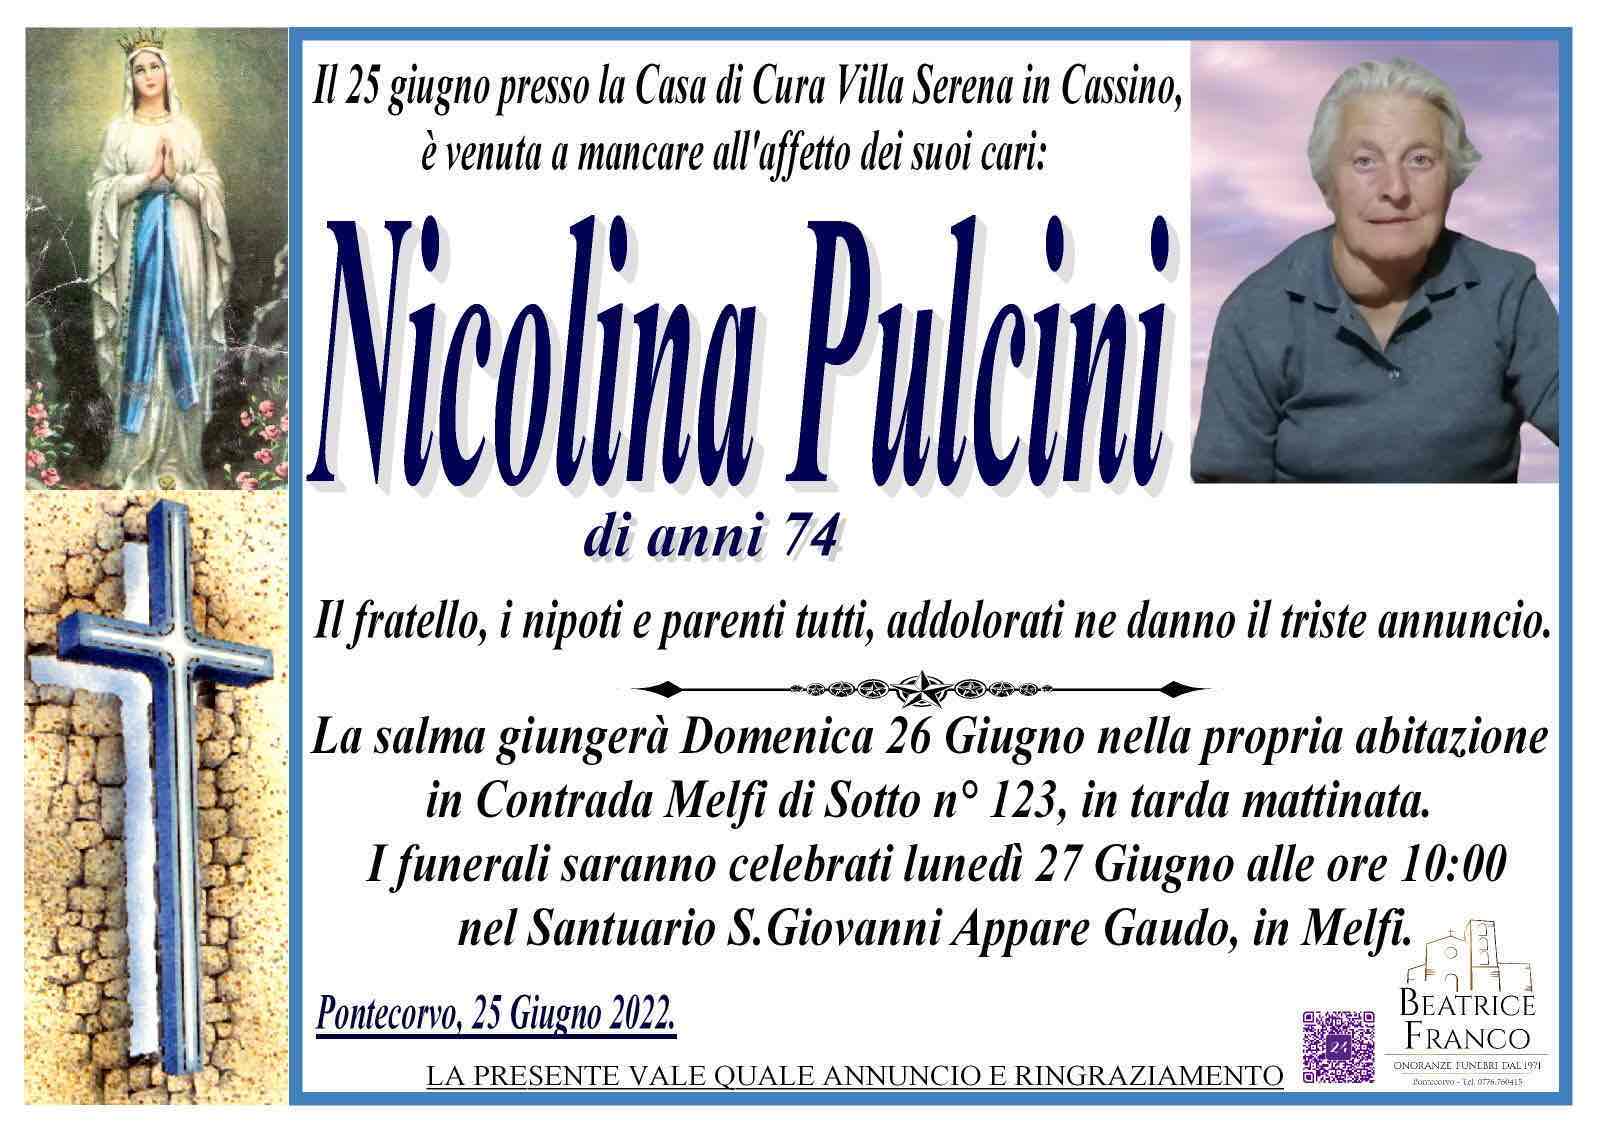 Nicolina Pulcini